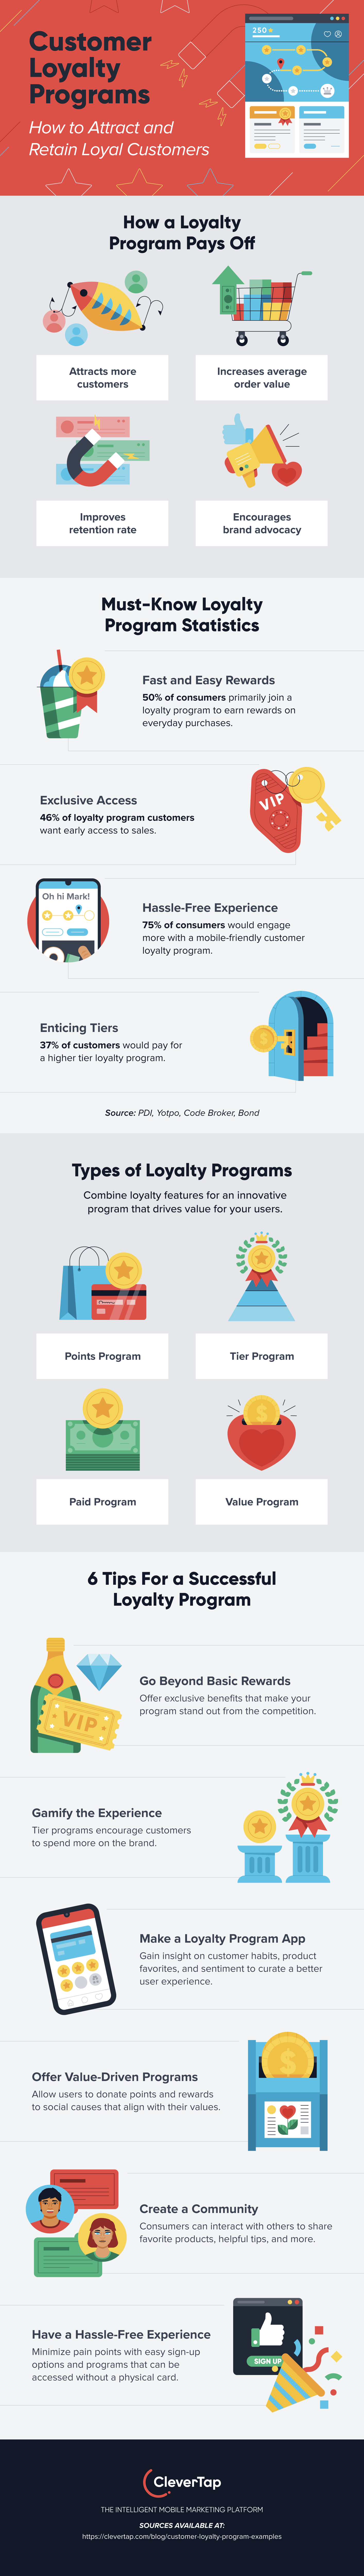 Customer loyalty programs- full infographic